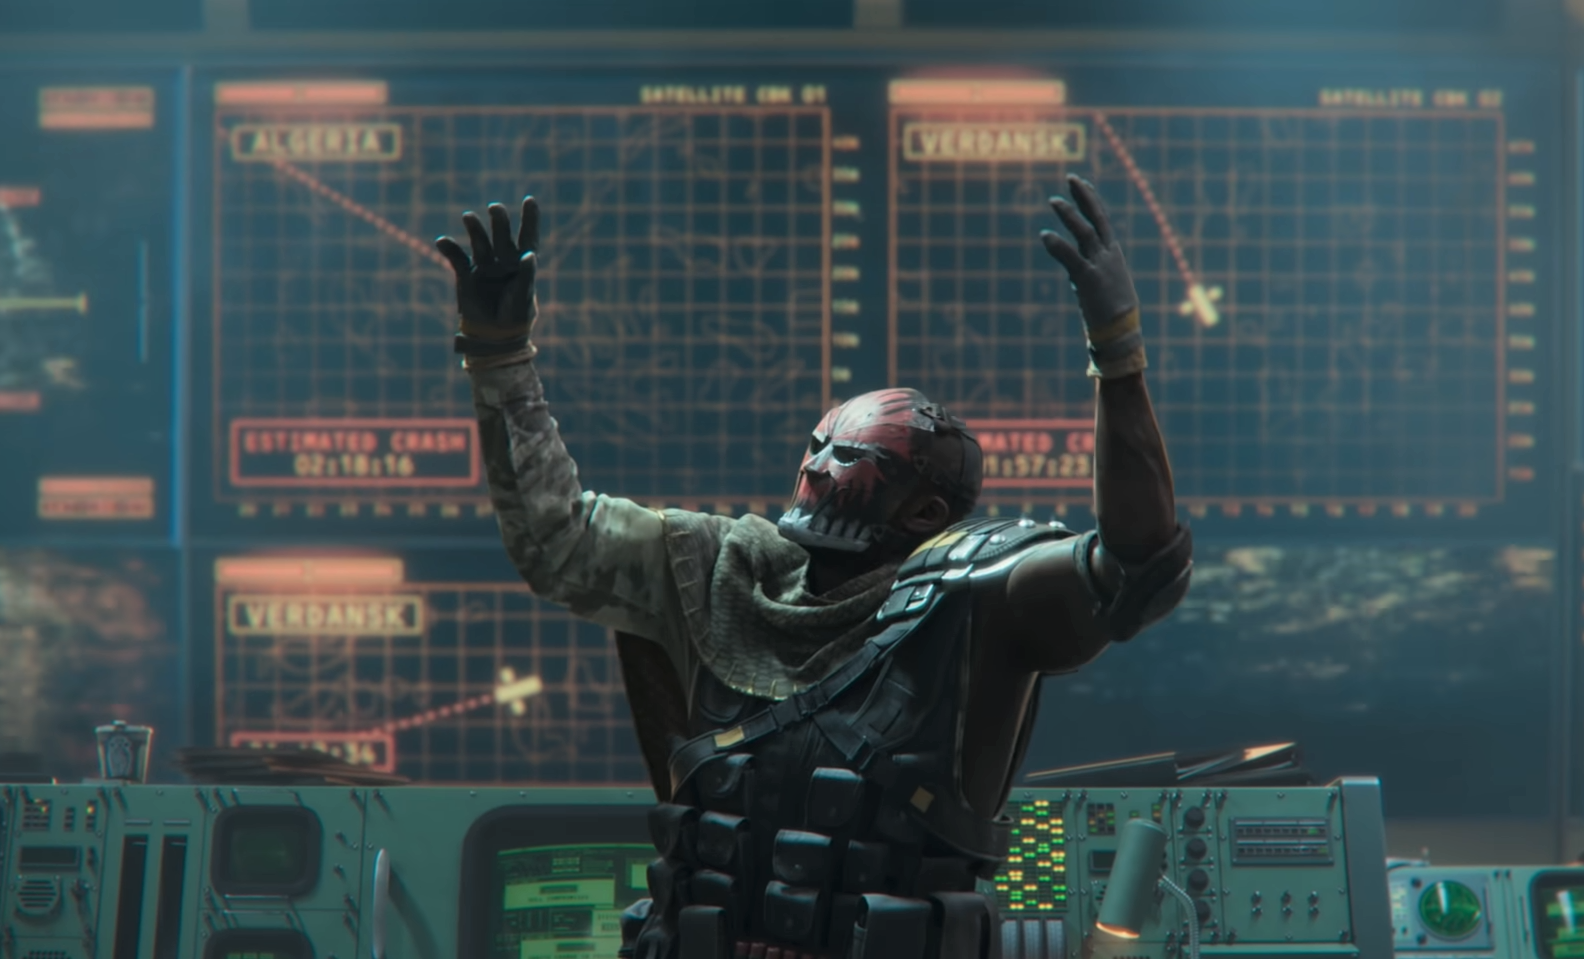 Bilder zu Call of Duty Warzone bekommt schicke Next-Gen-Texturen spendiert